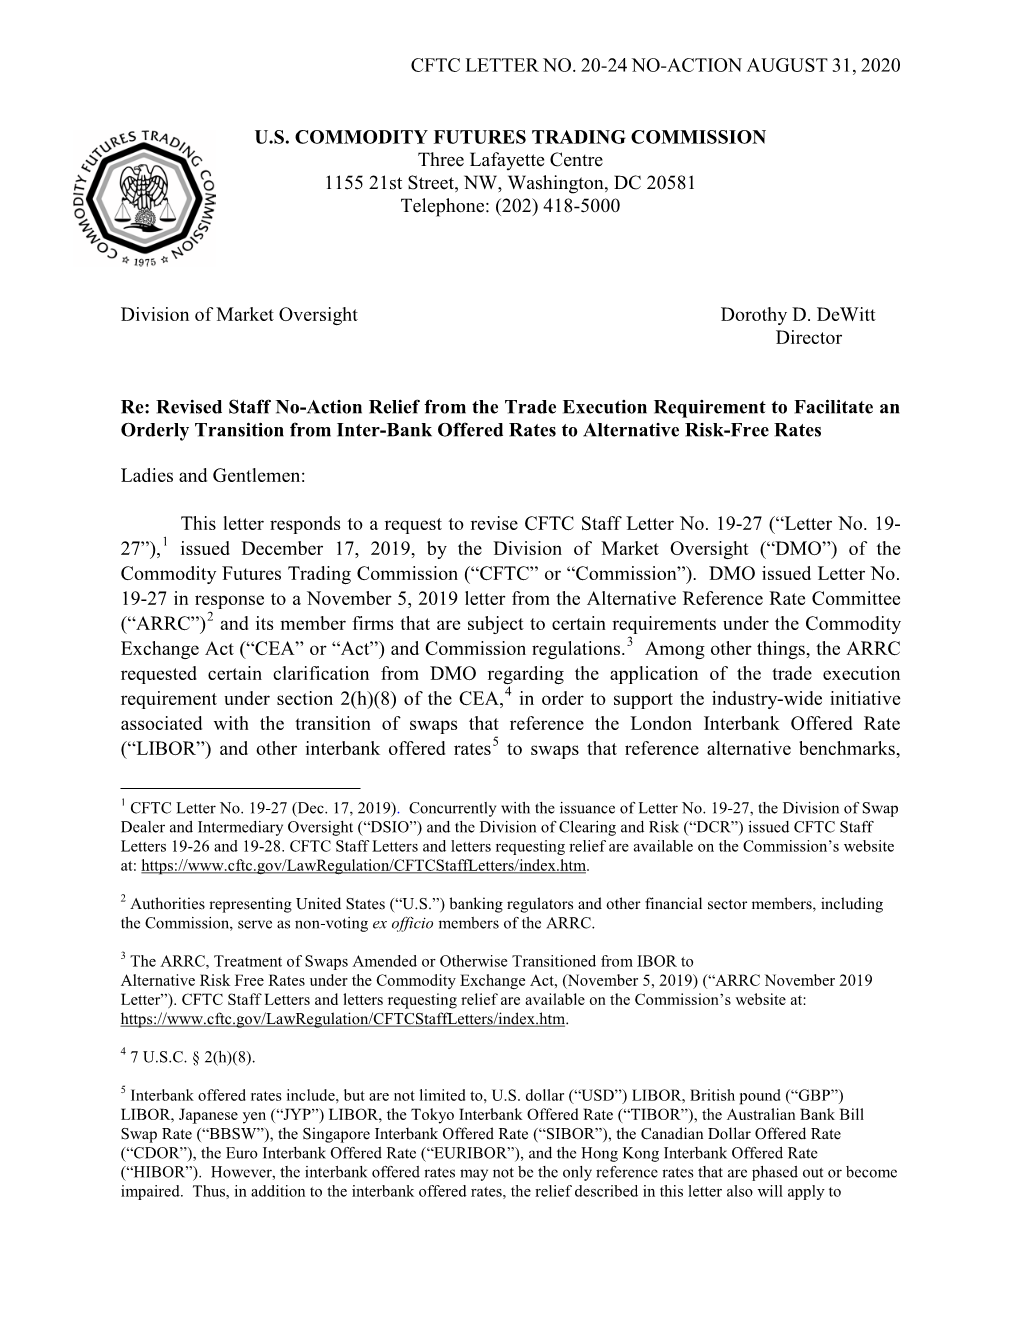 CFTC Staff Letter No. 20-24